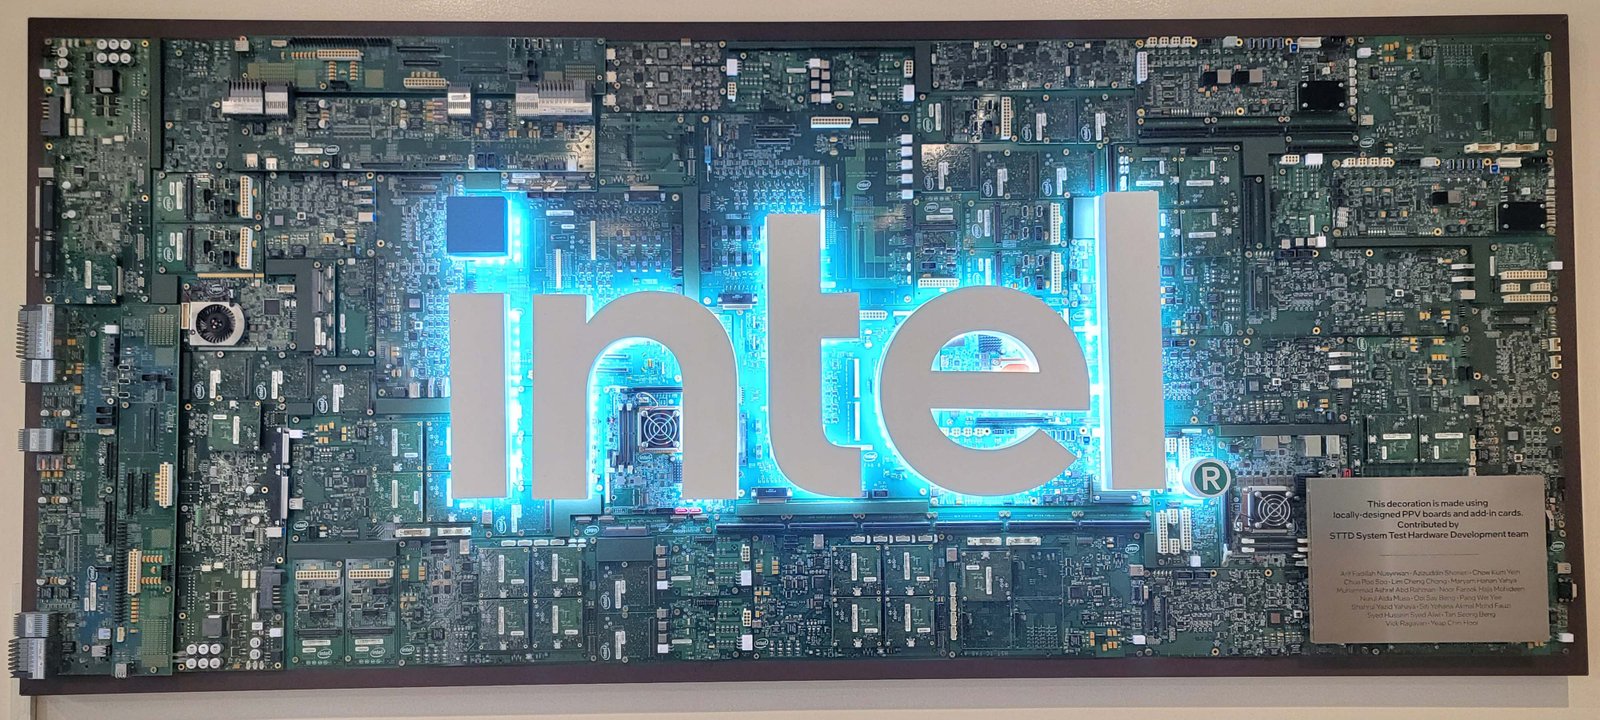 Intel Launches AI Image Generation App